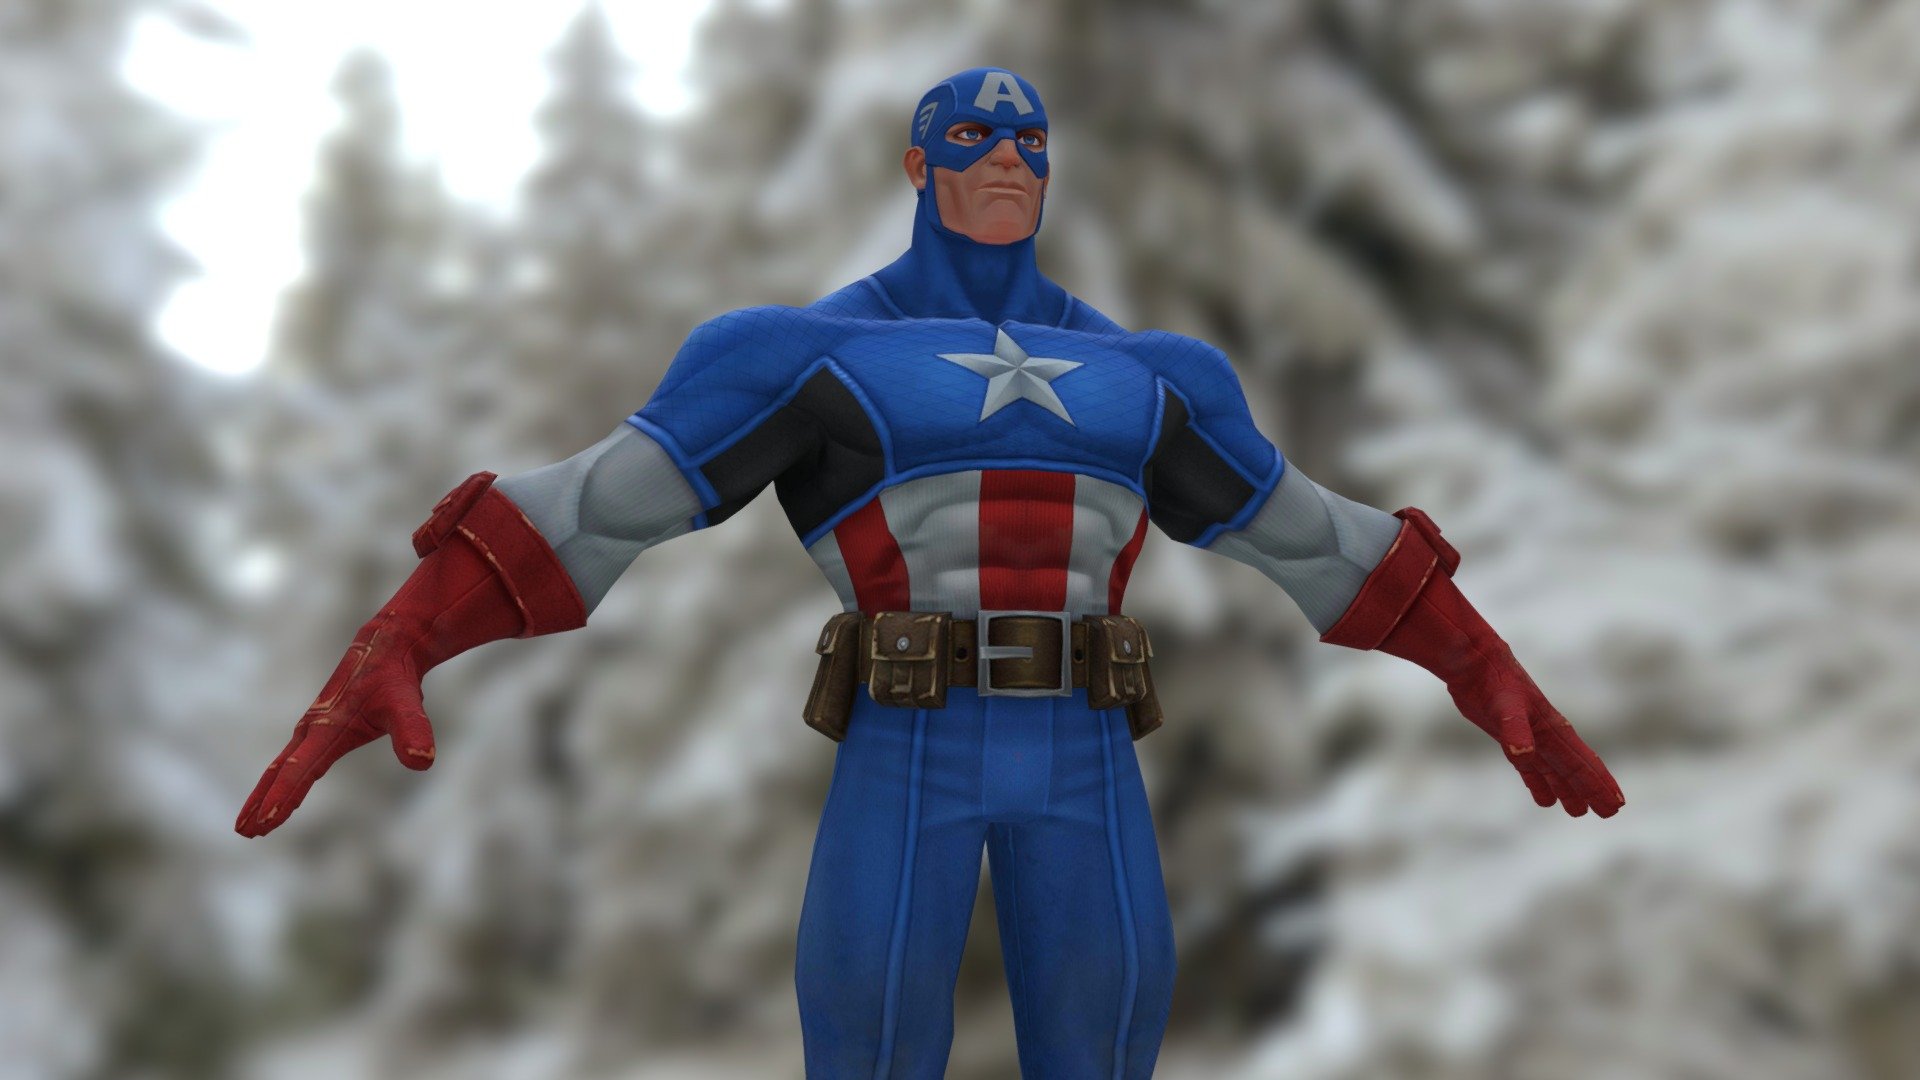 Captain America (Download for internet) 
Im trying Sketchfab 3d model